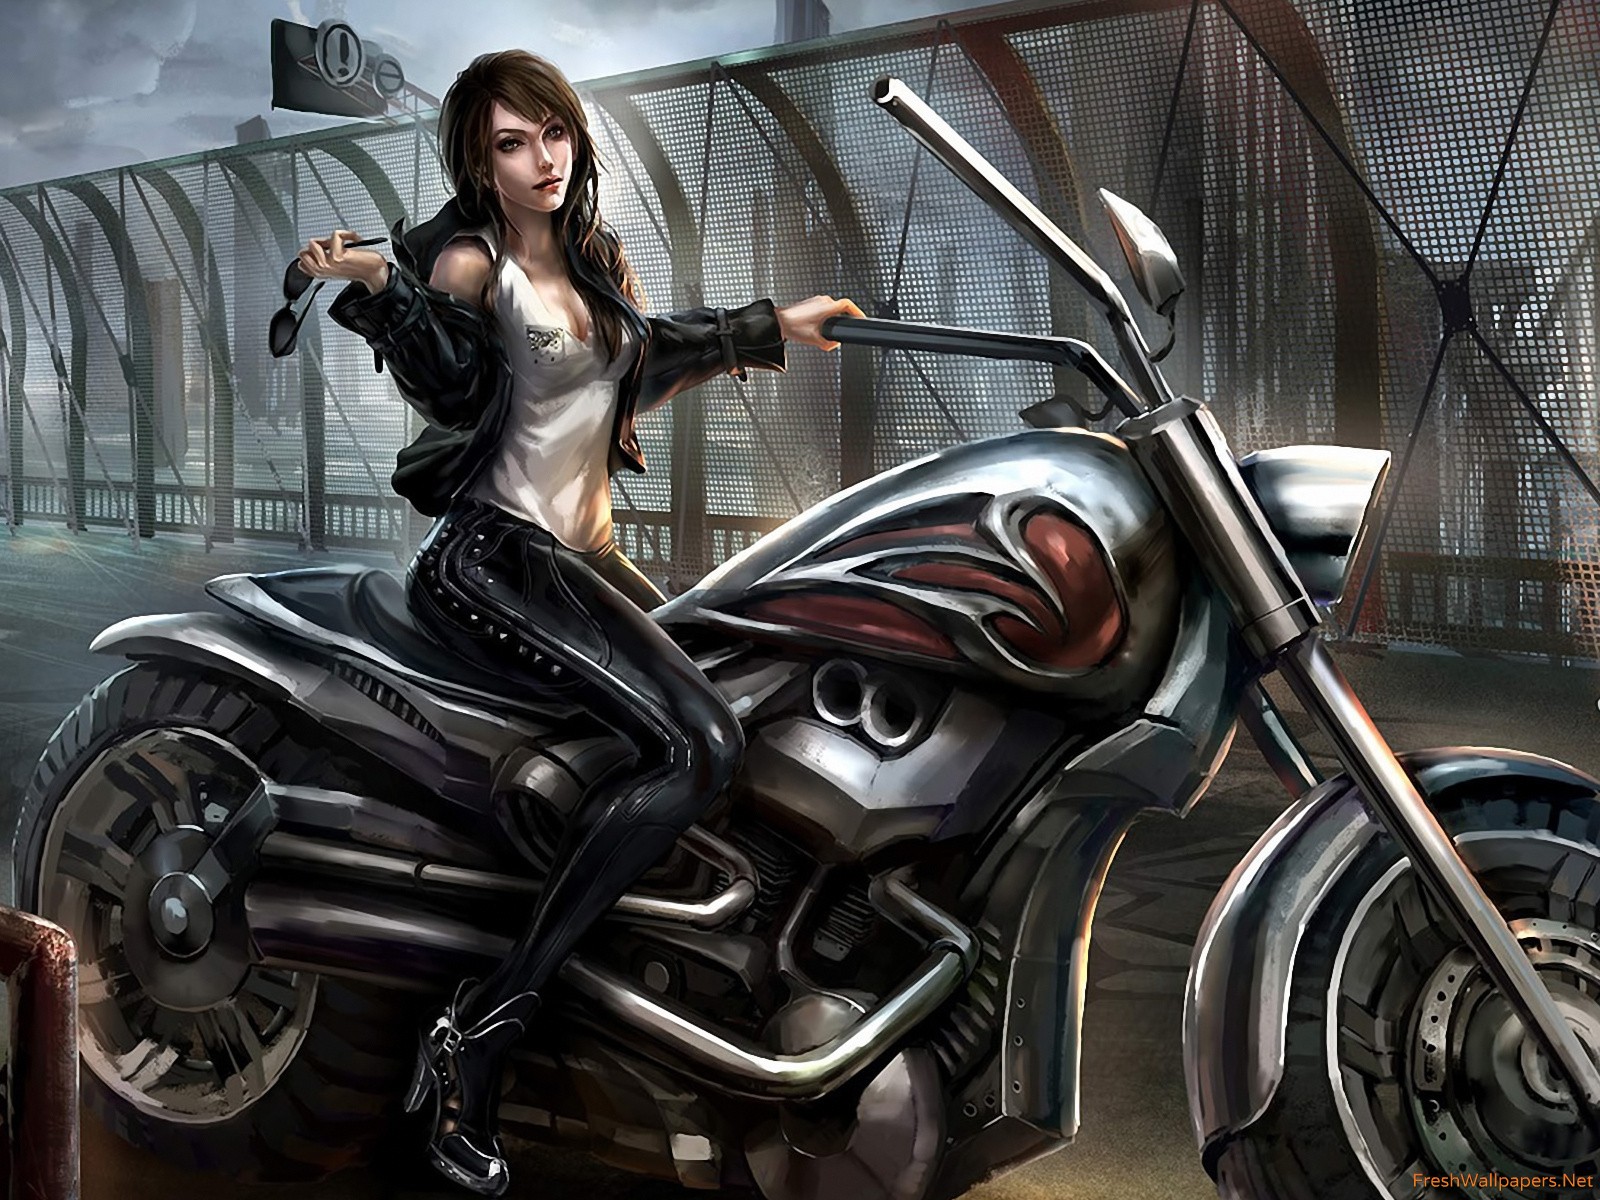 Motorcycle Girl 2 Wallpaper - Motorcycle Girl , HD Wallpaper & Backgrounds